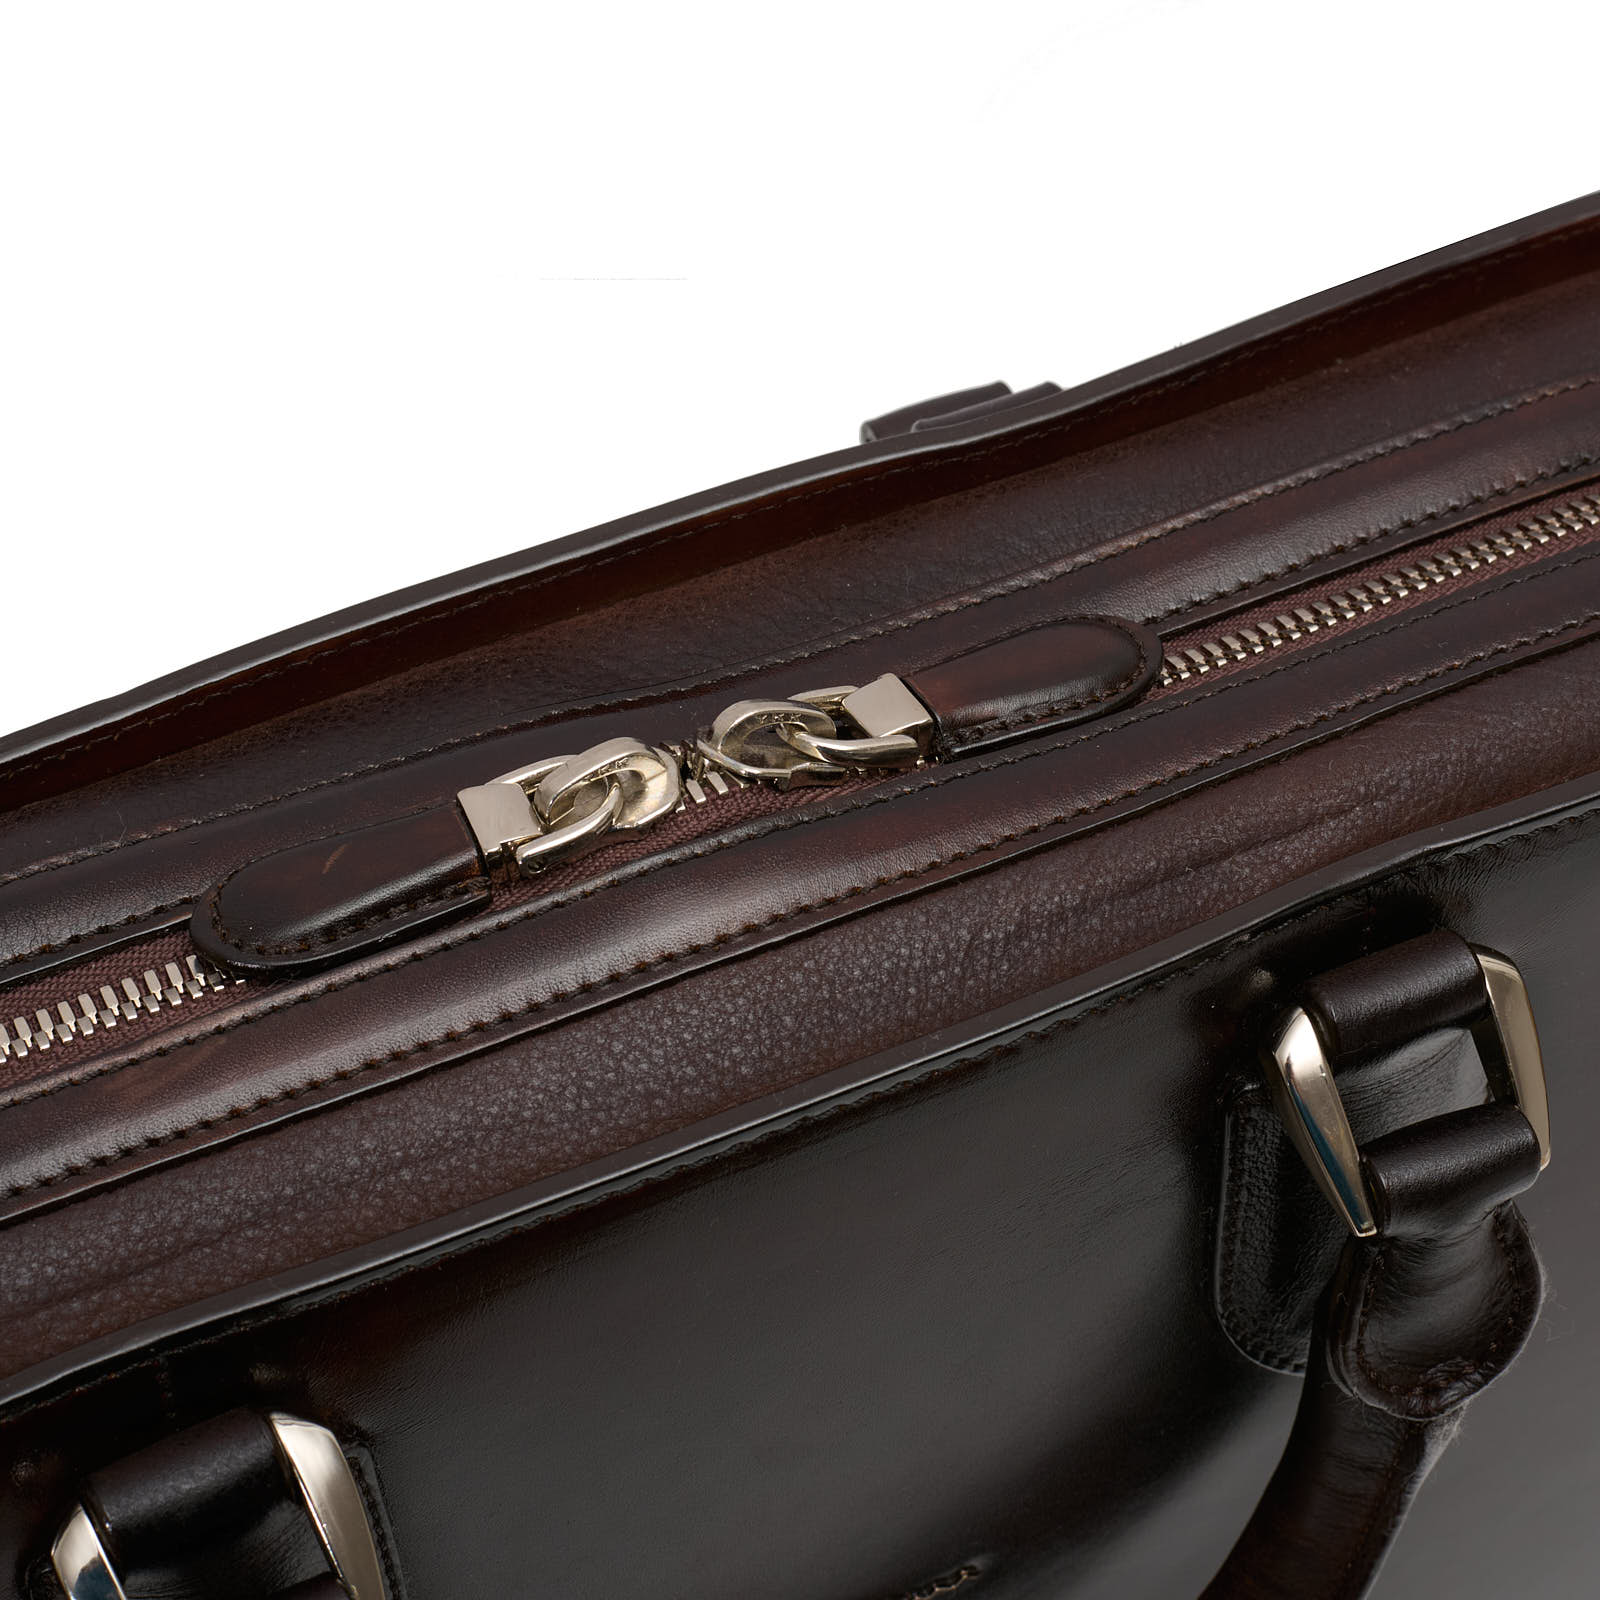 SANTONI Brown Handpainted Leather Briefcase Bag NEW